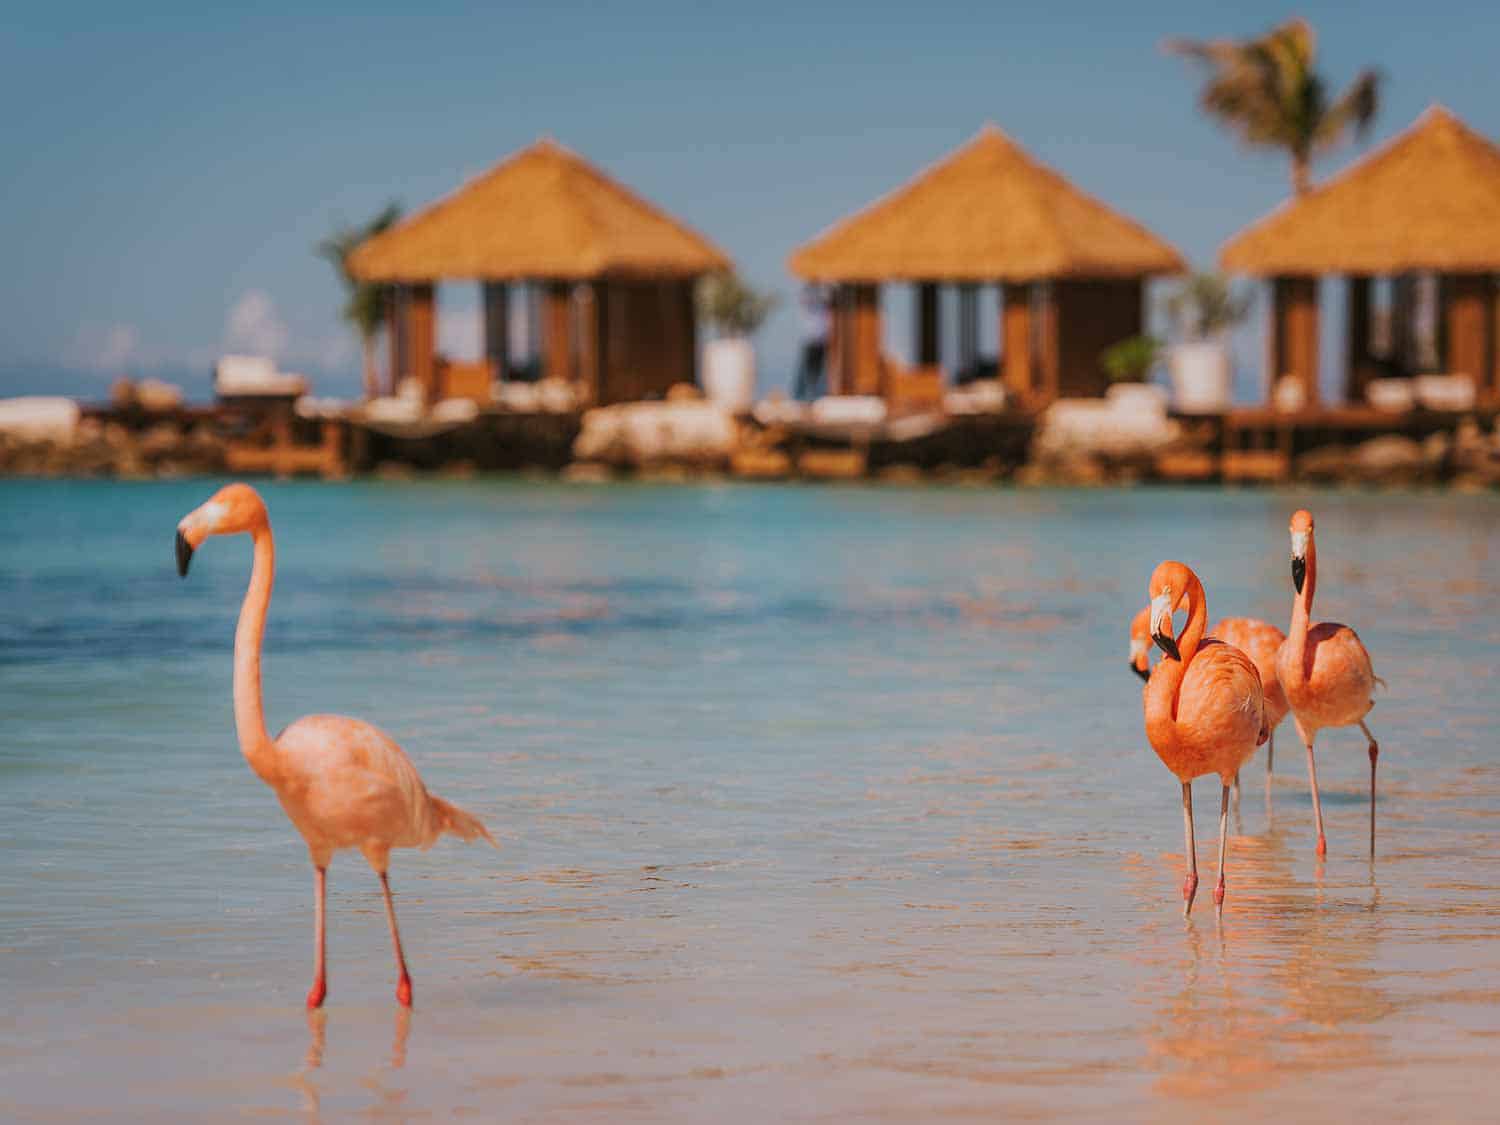 Aruba’s famous flamingos